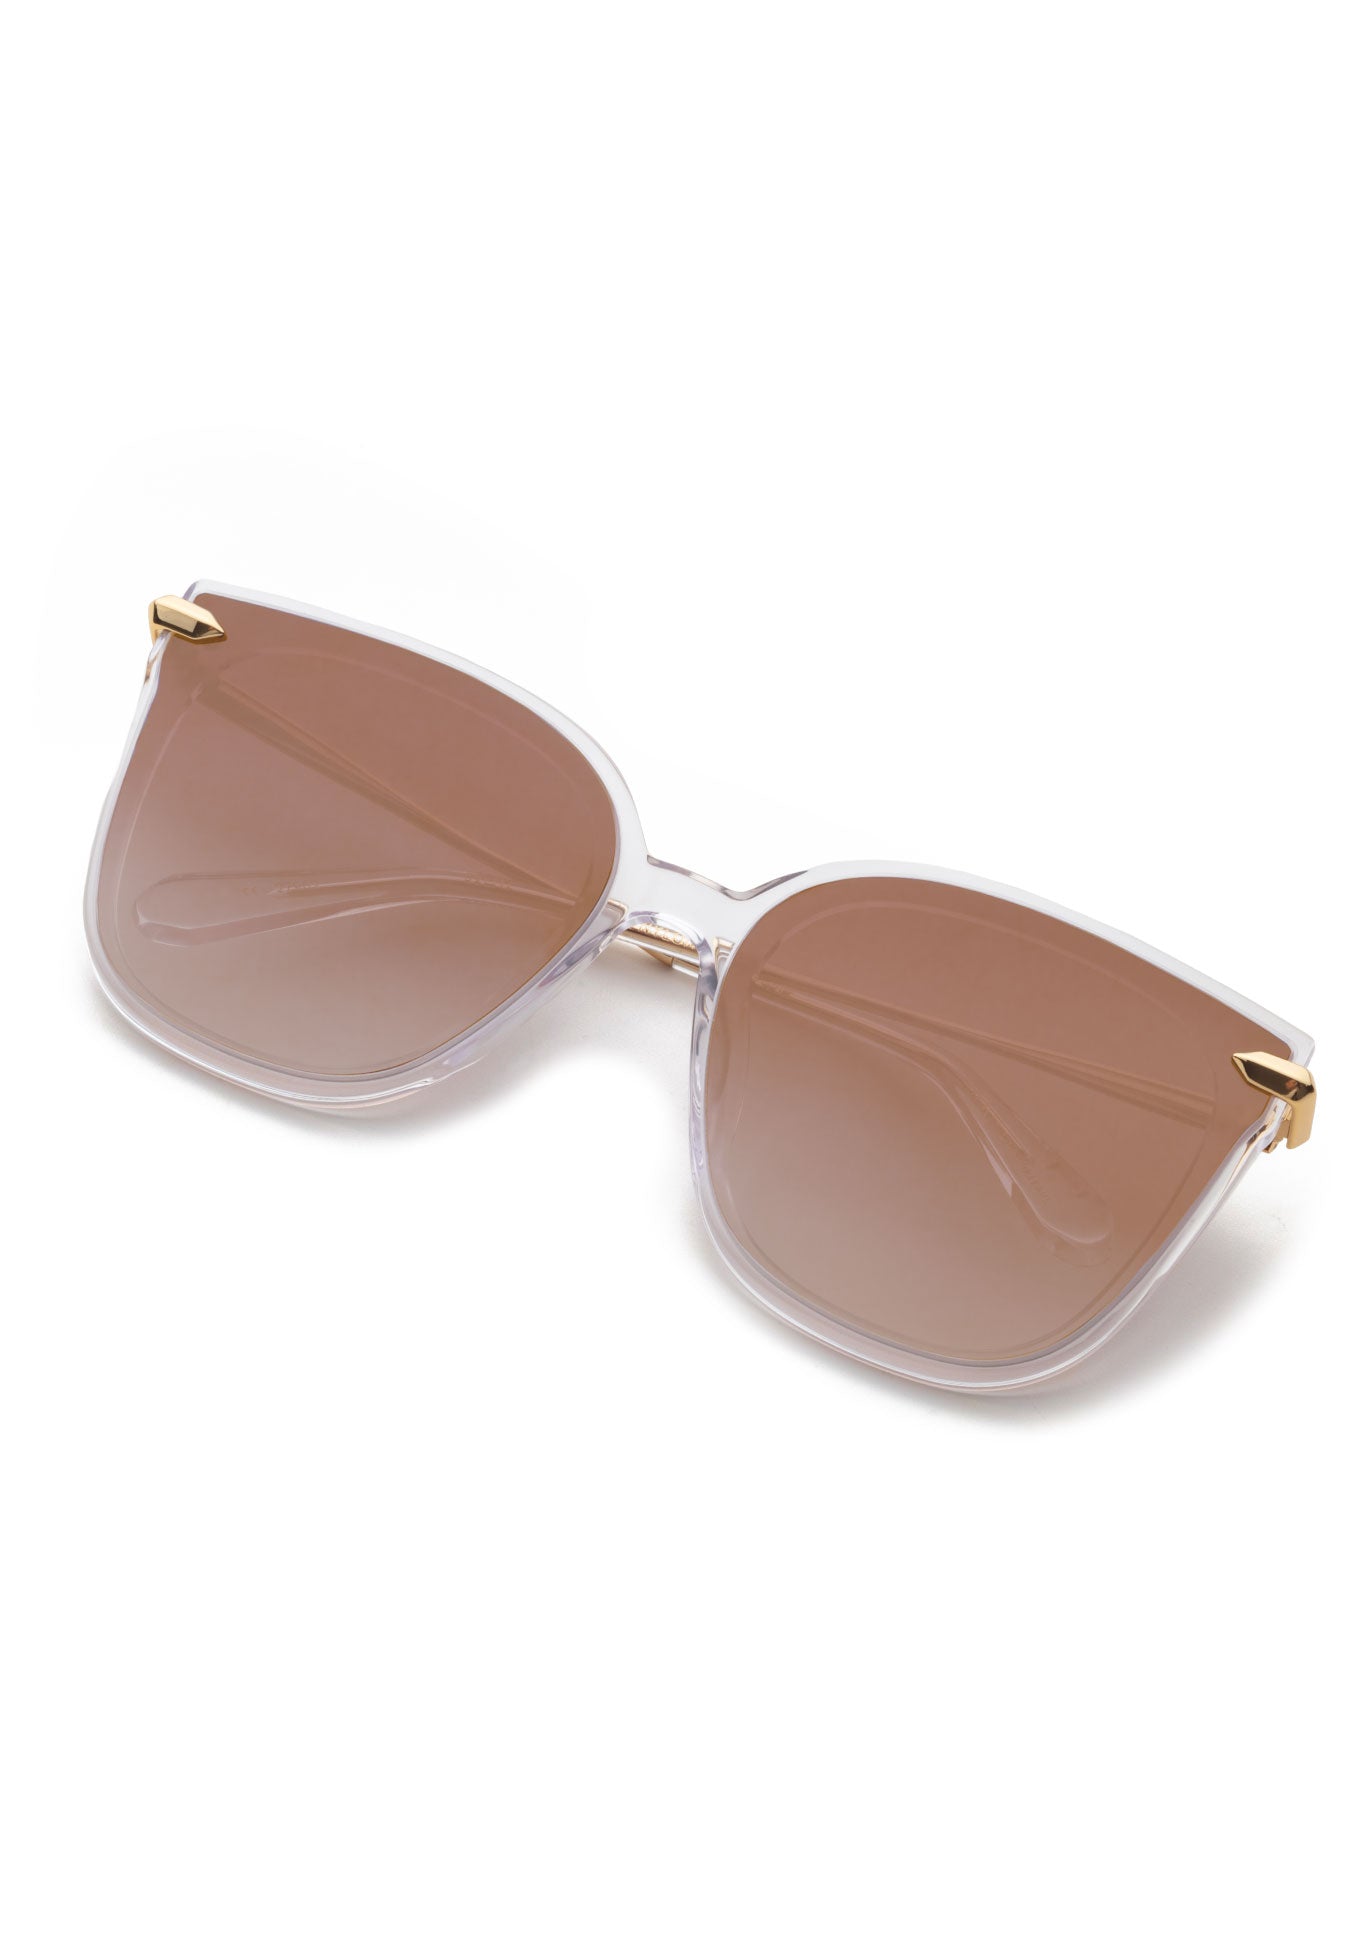 KREWE SUNGLASSES - DEDE NYLON | Crystal 18K Mirrored handcrafted, luxury clear acetate nylon sunglasses